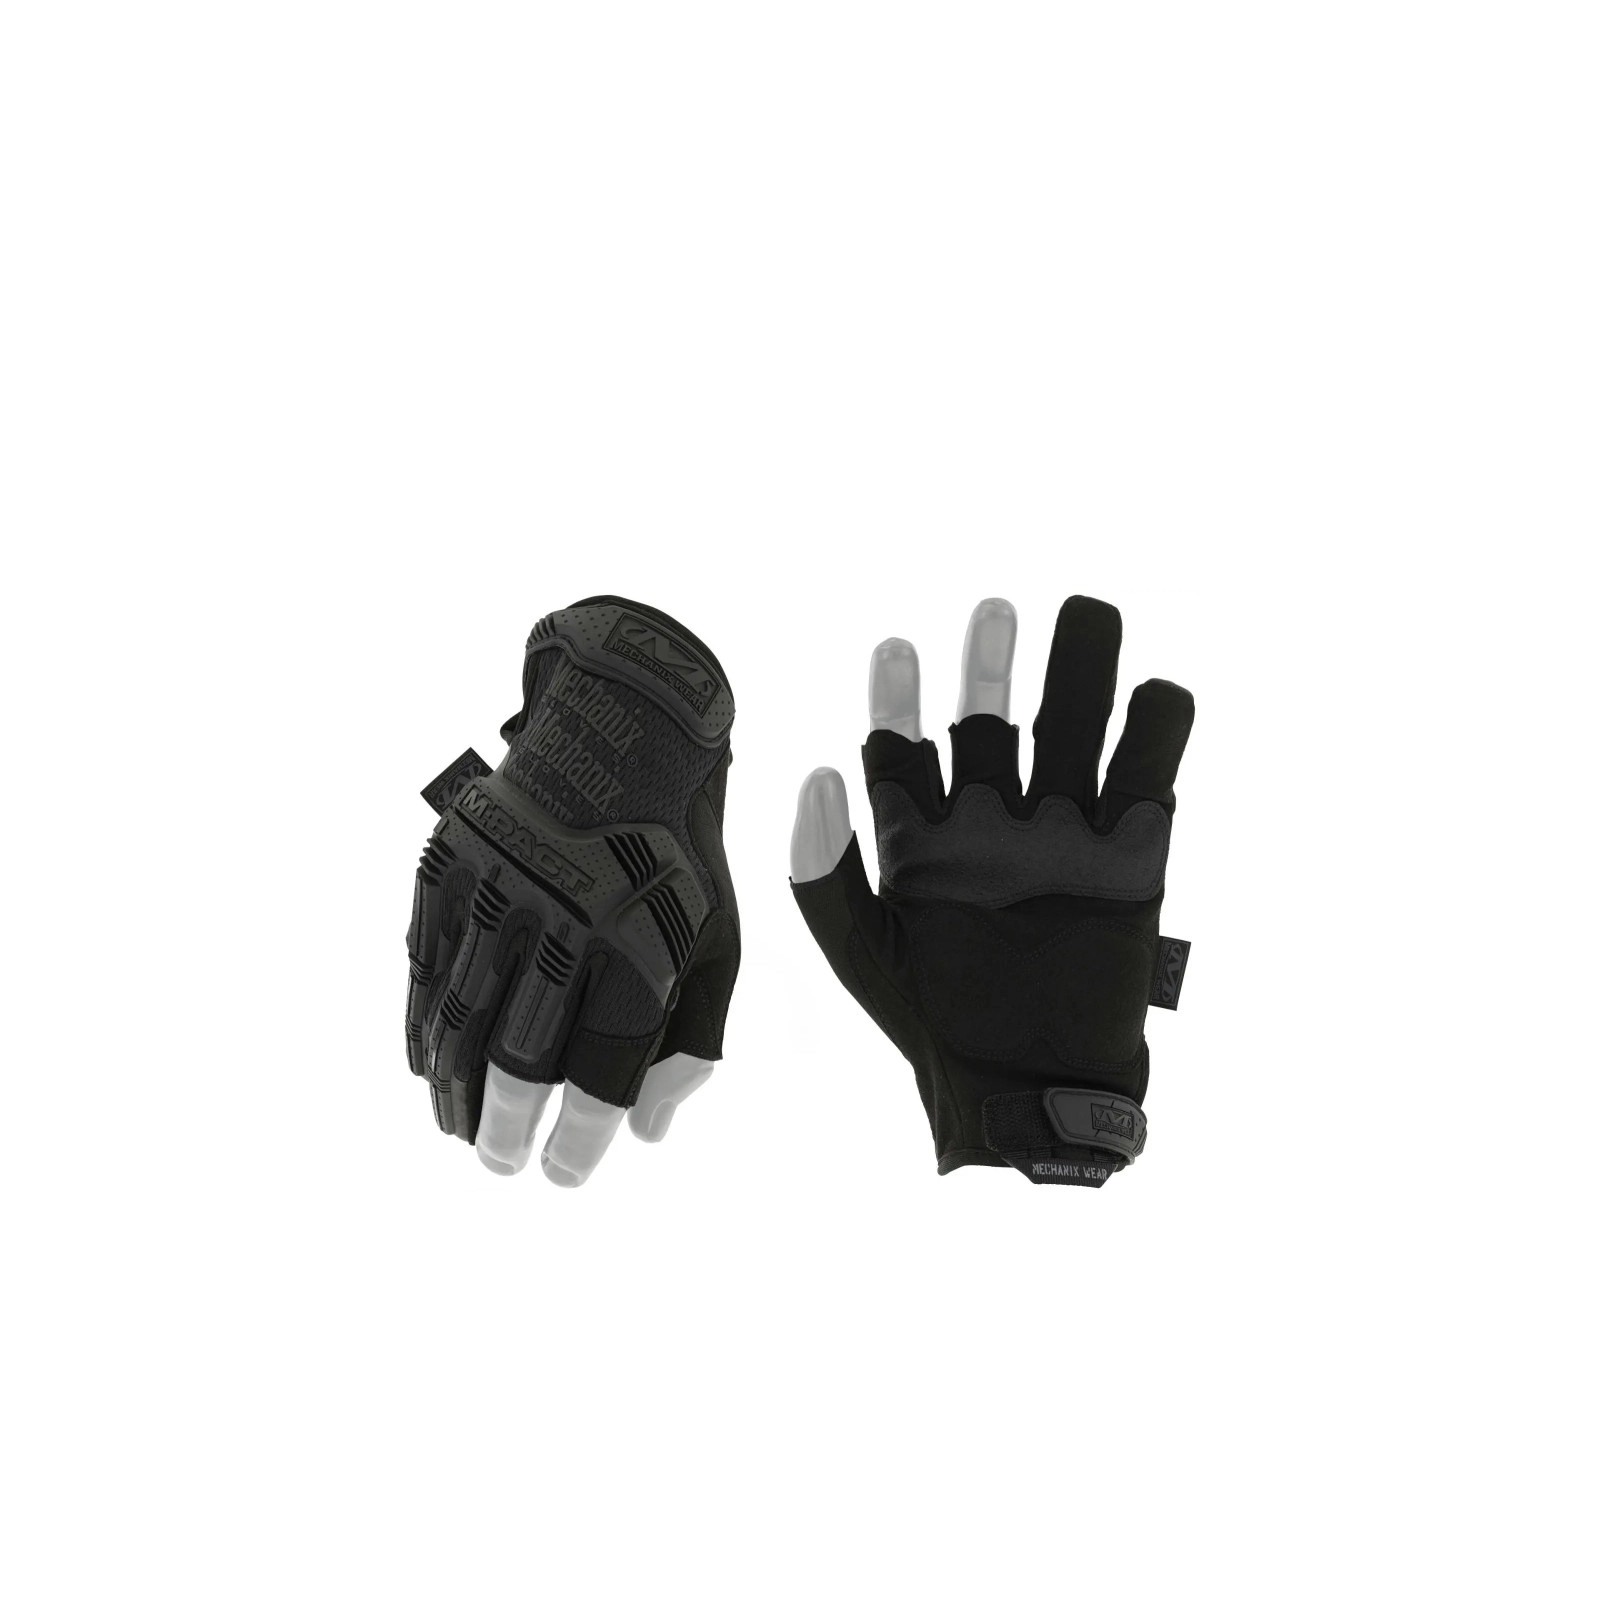 Захисні рукавиці Mechanix M-Pact Trigger Finger Covert (LG) (MPF-55-010) зображення 3